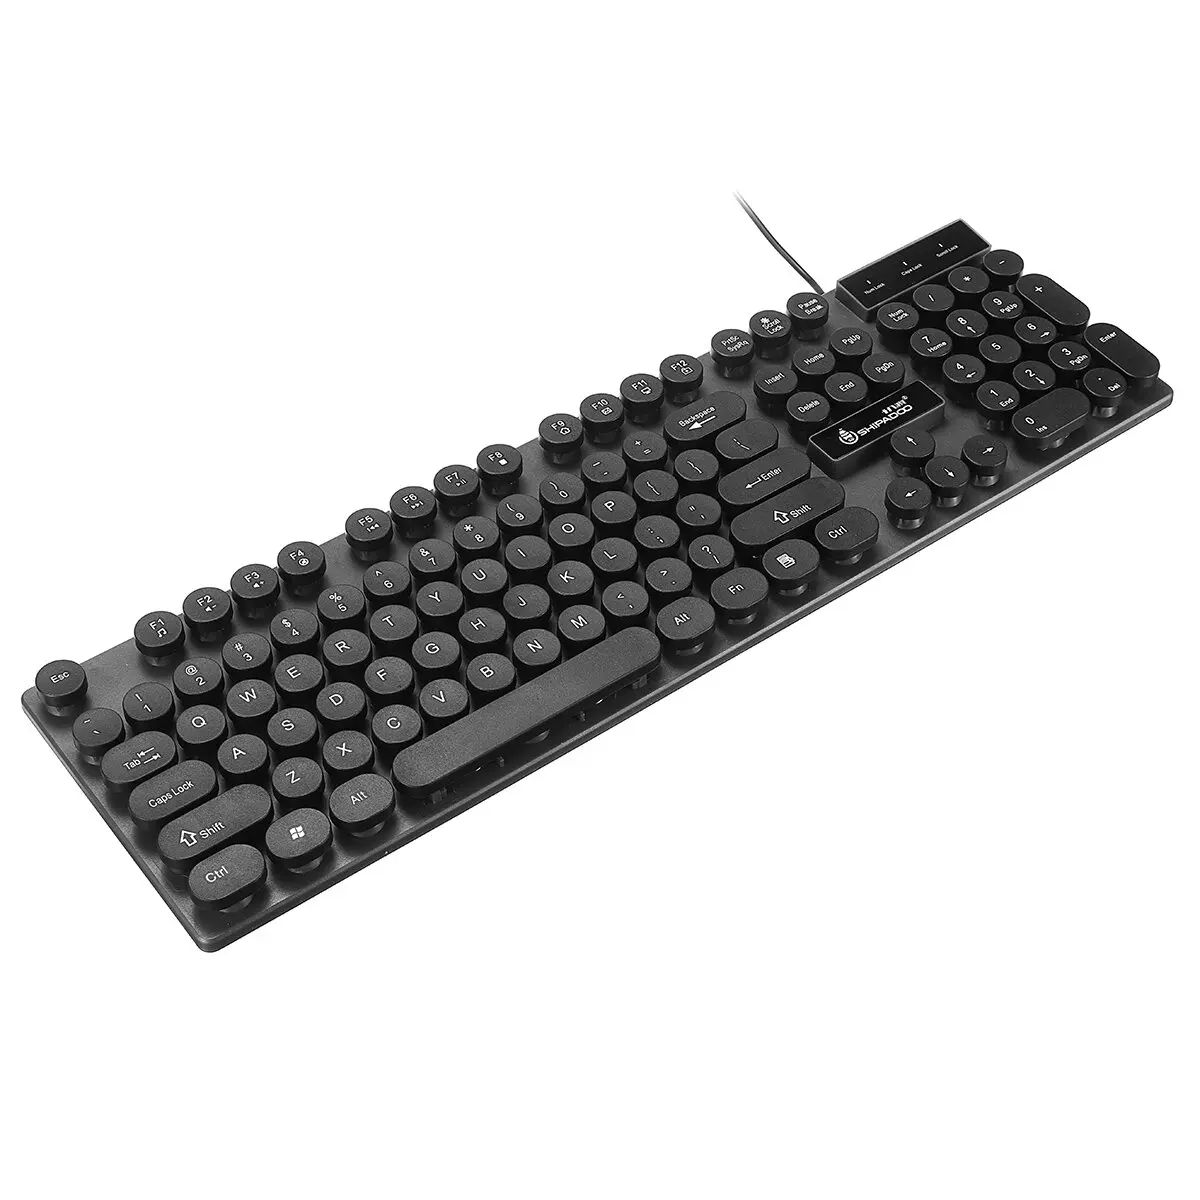 4-in-1 Keyboard Mouse Headset Mouse Pad Set Gaming Kit 104 Keys LED breathing Backlight Mechanical Feel Gaming Keyboard enlarge